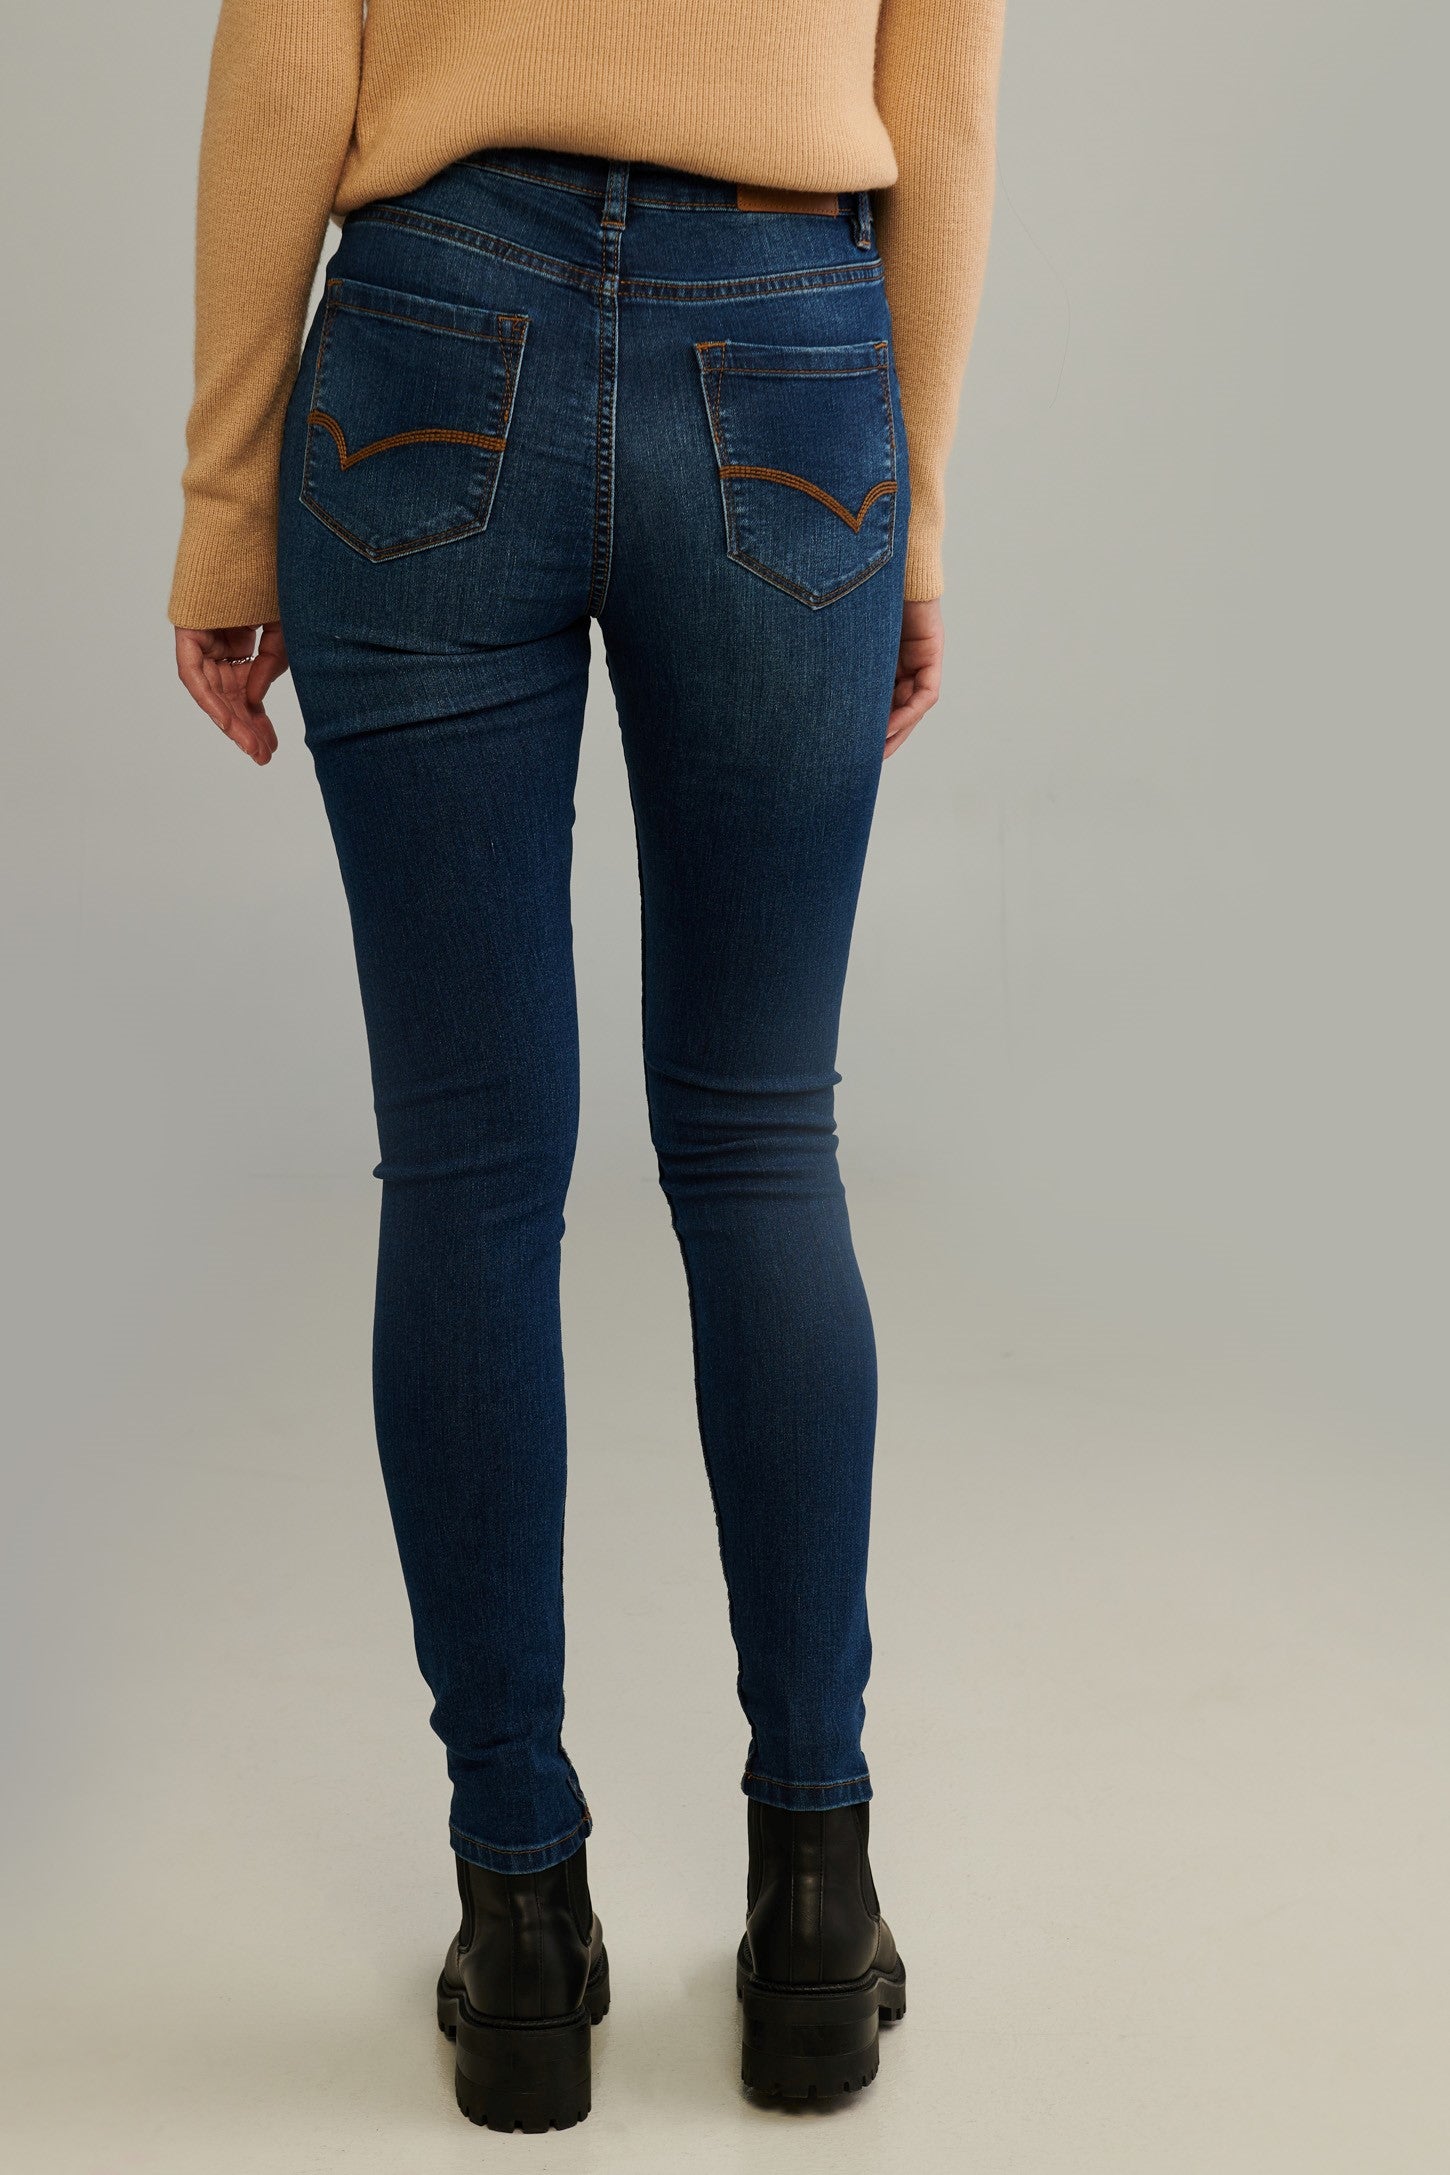 Jeans taille haute, coupe ajustée - Femme && DENIM FONCE